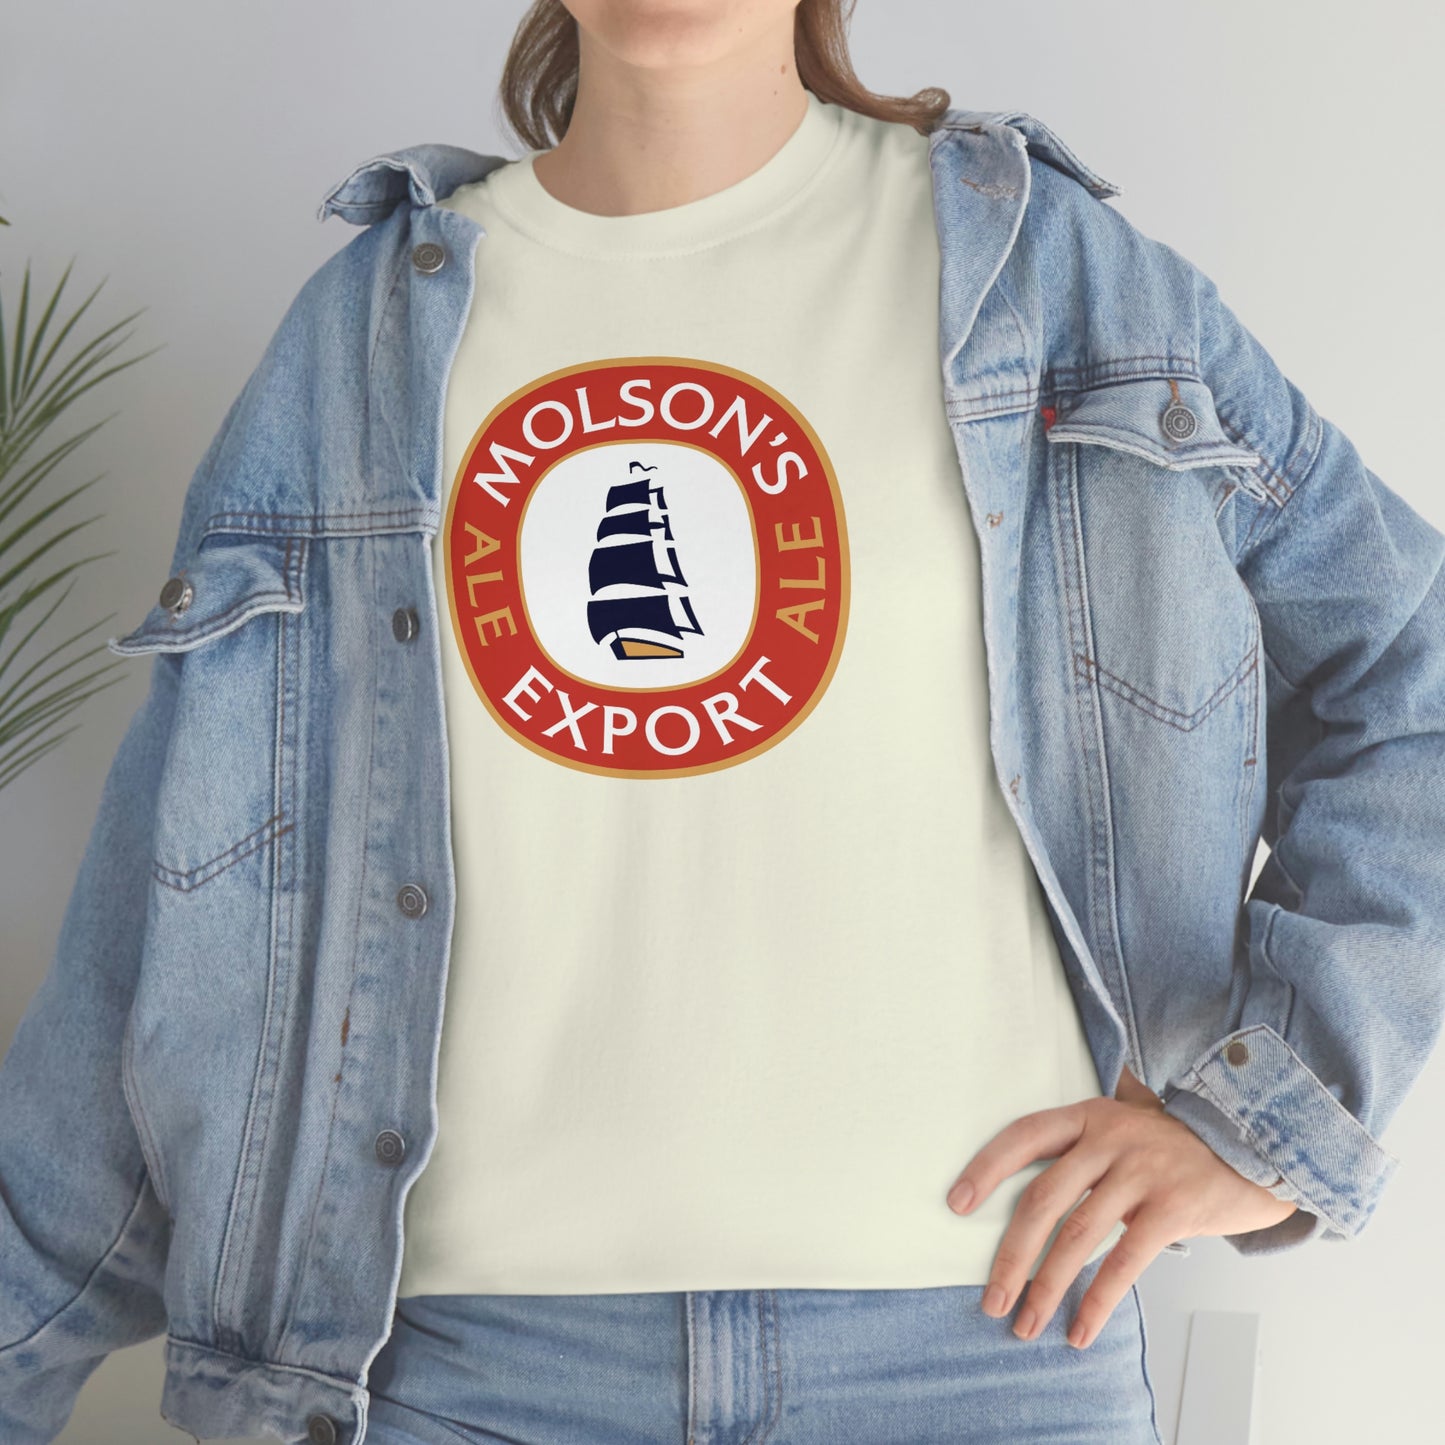 Molson Export T-Shirt